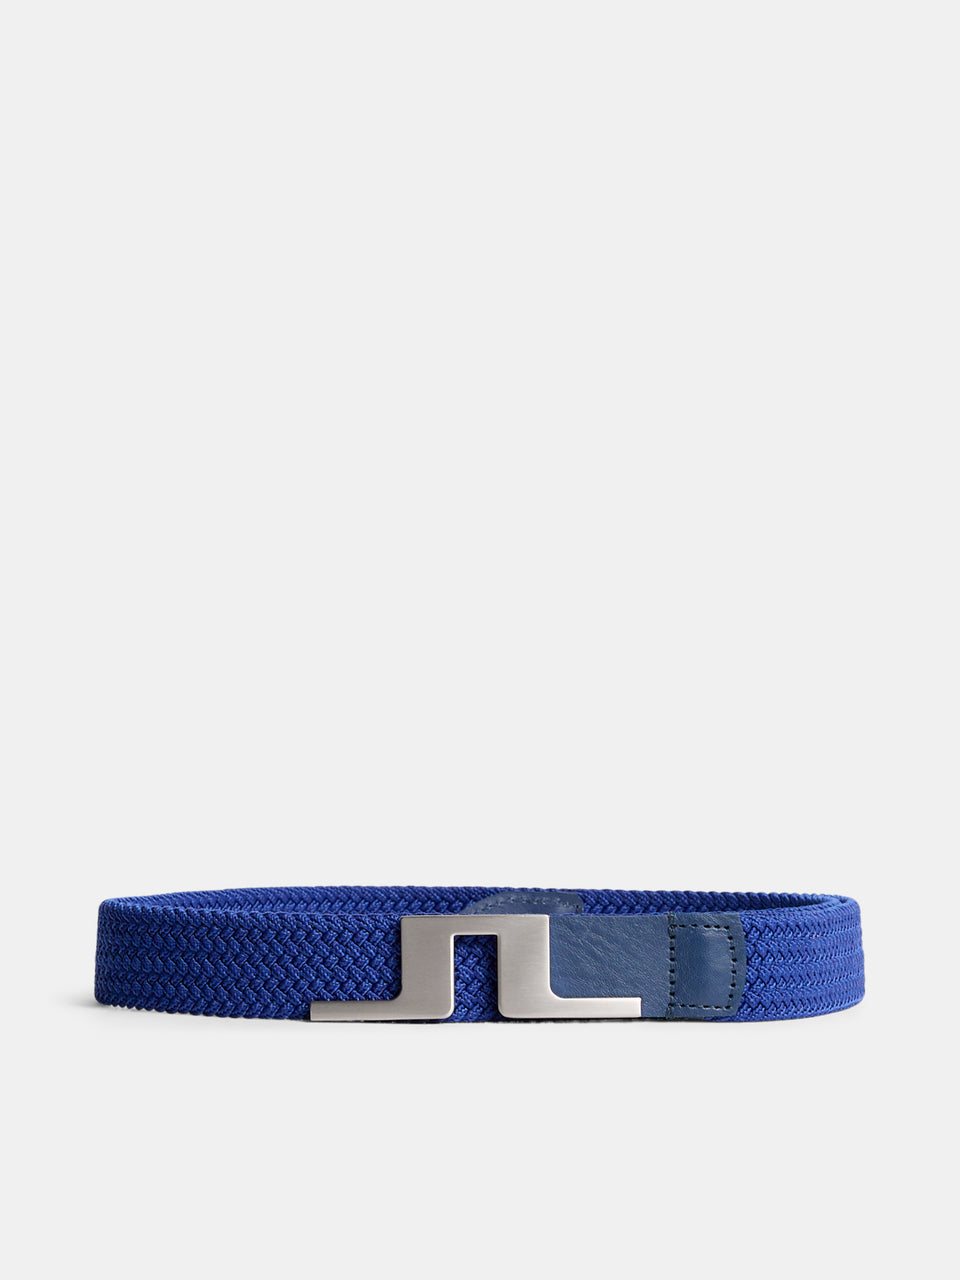 The Lykke Belt / Estate Blue